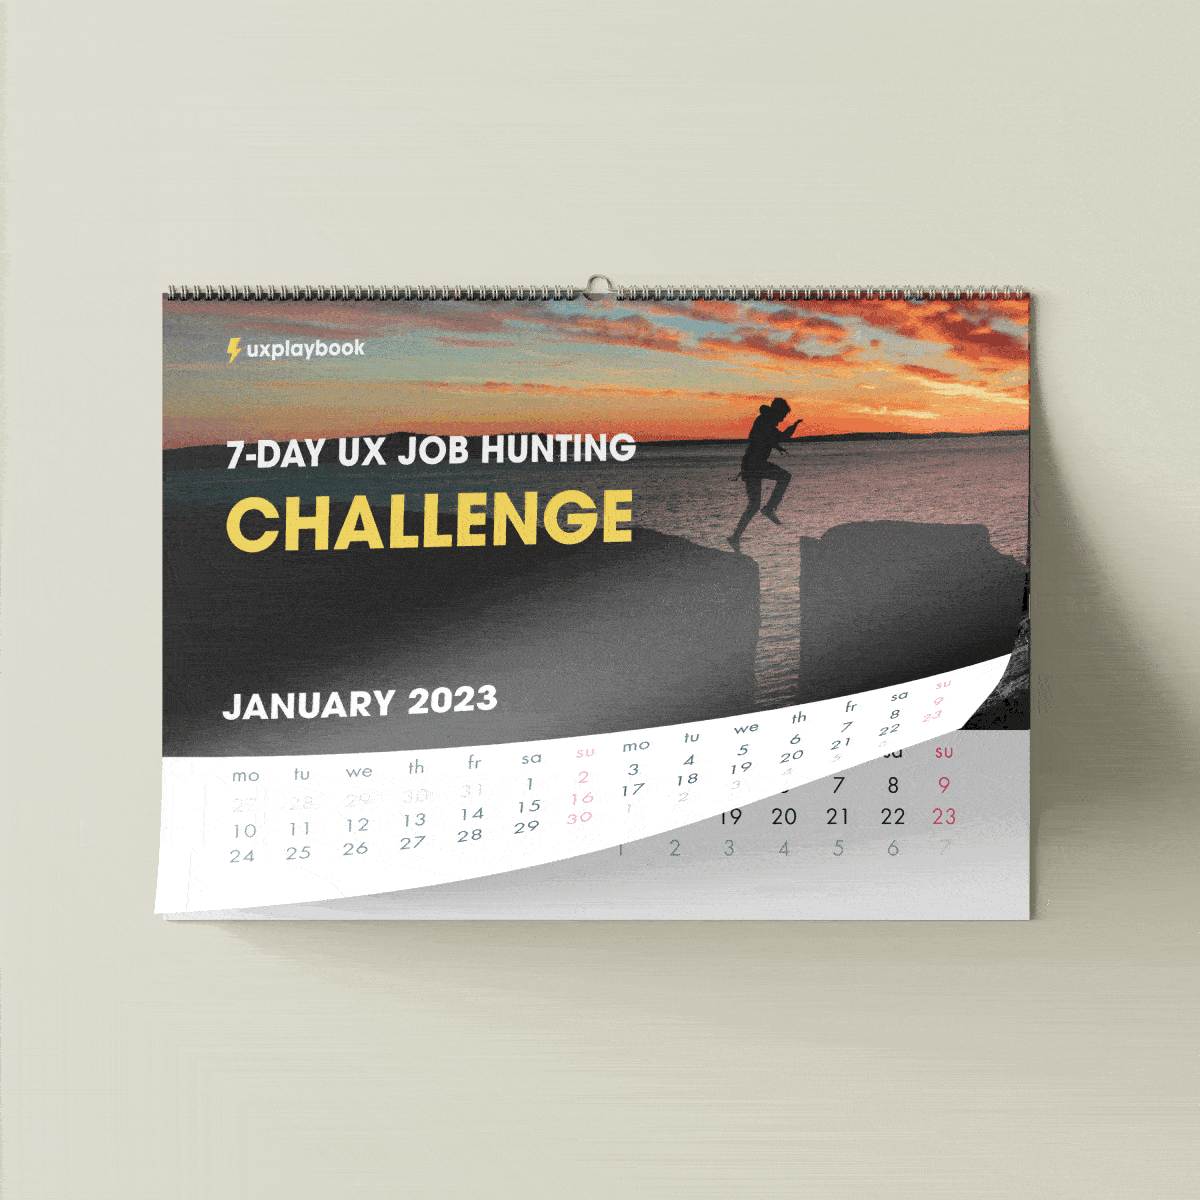 7-Day UX Job Hunting Challenge logo